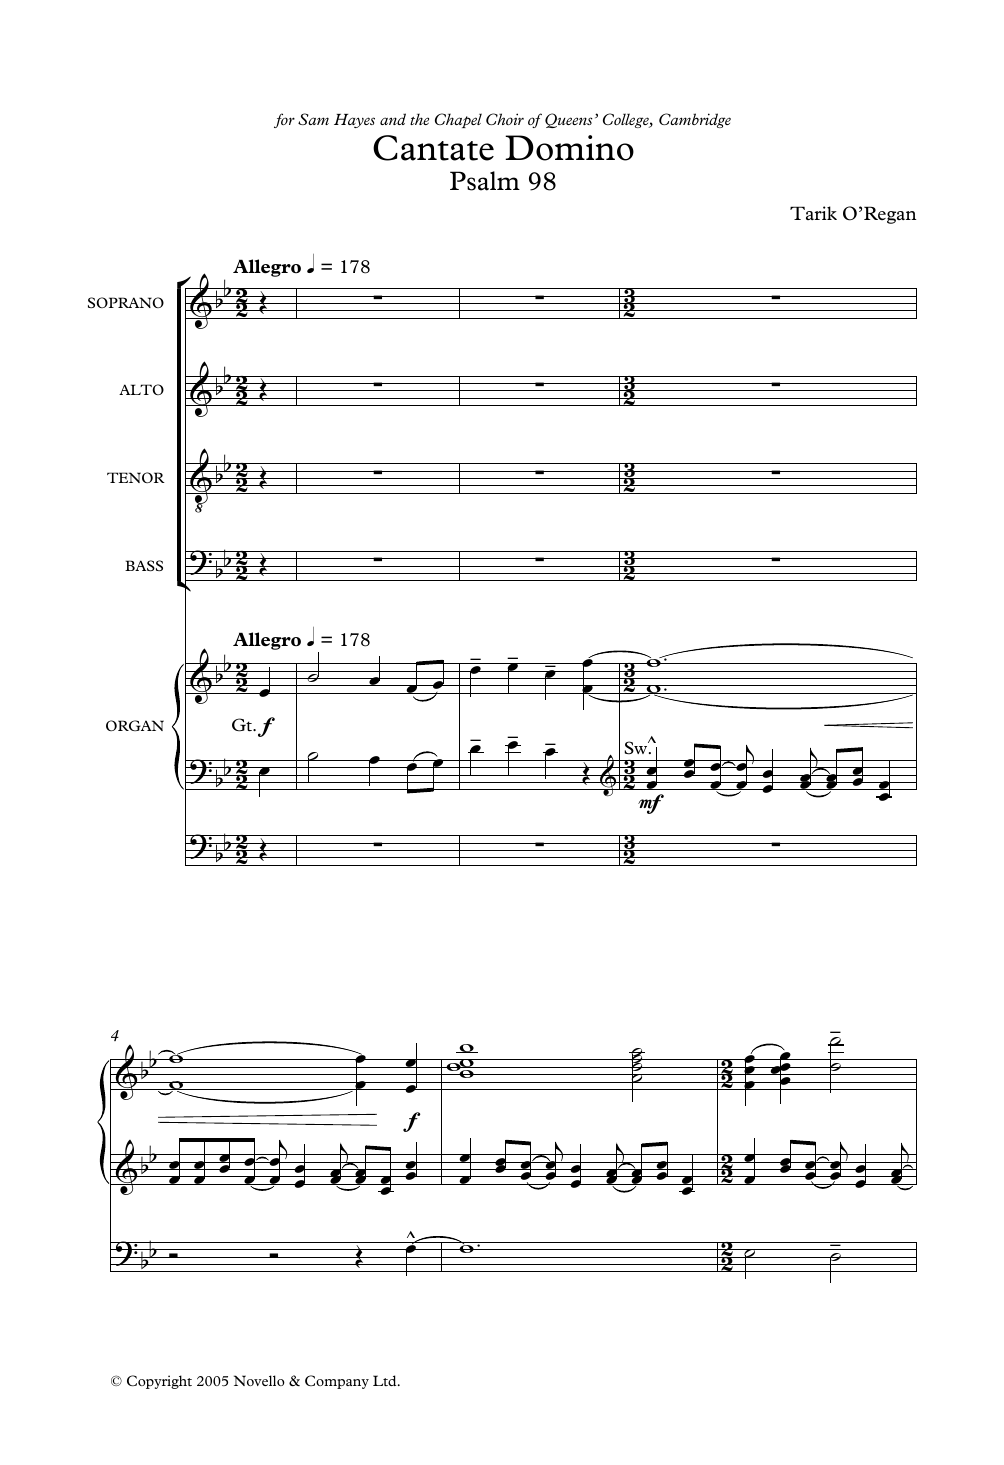 Tarik O'Regan Cantate Domino Sheet Music Notes & Chords for SATB Choir - Download or Print PDF